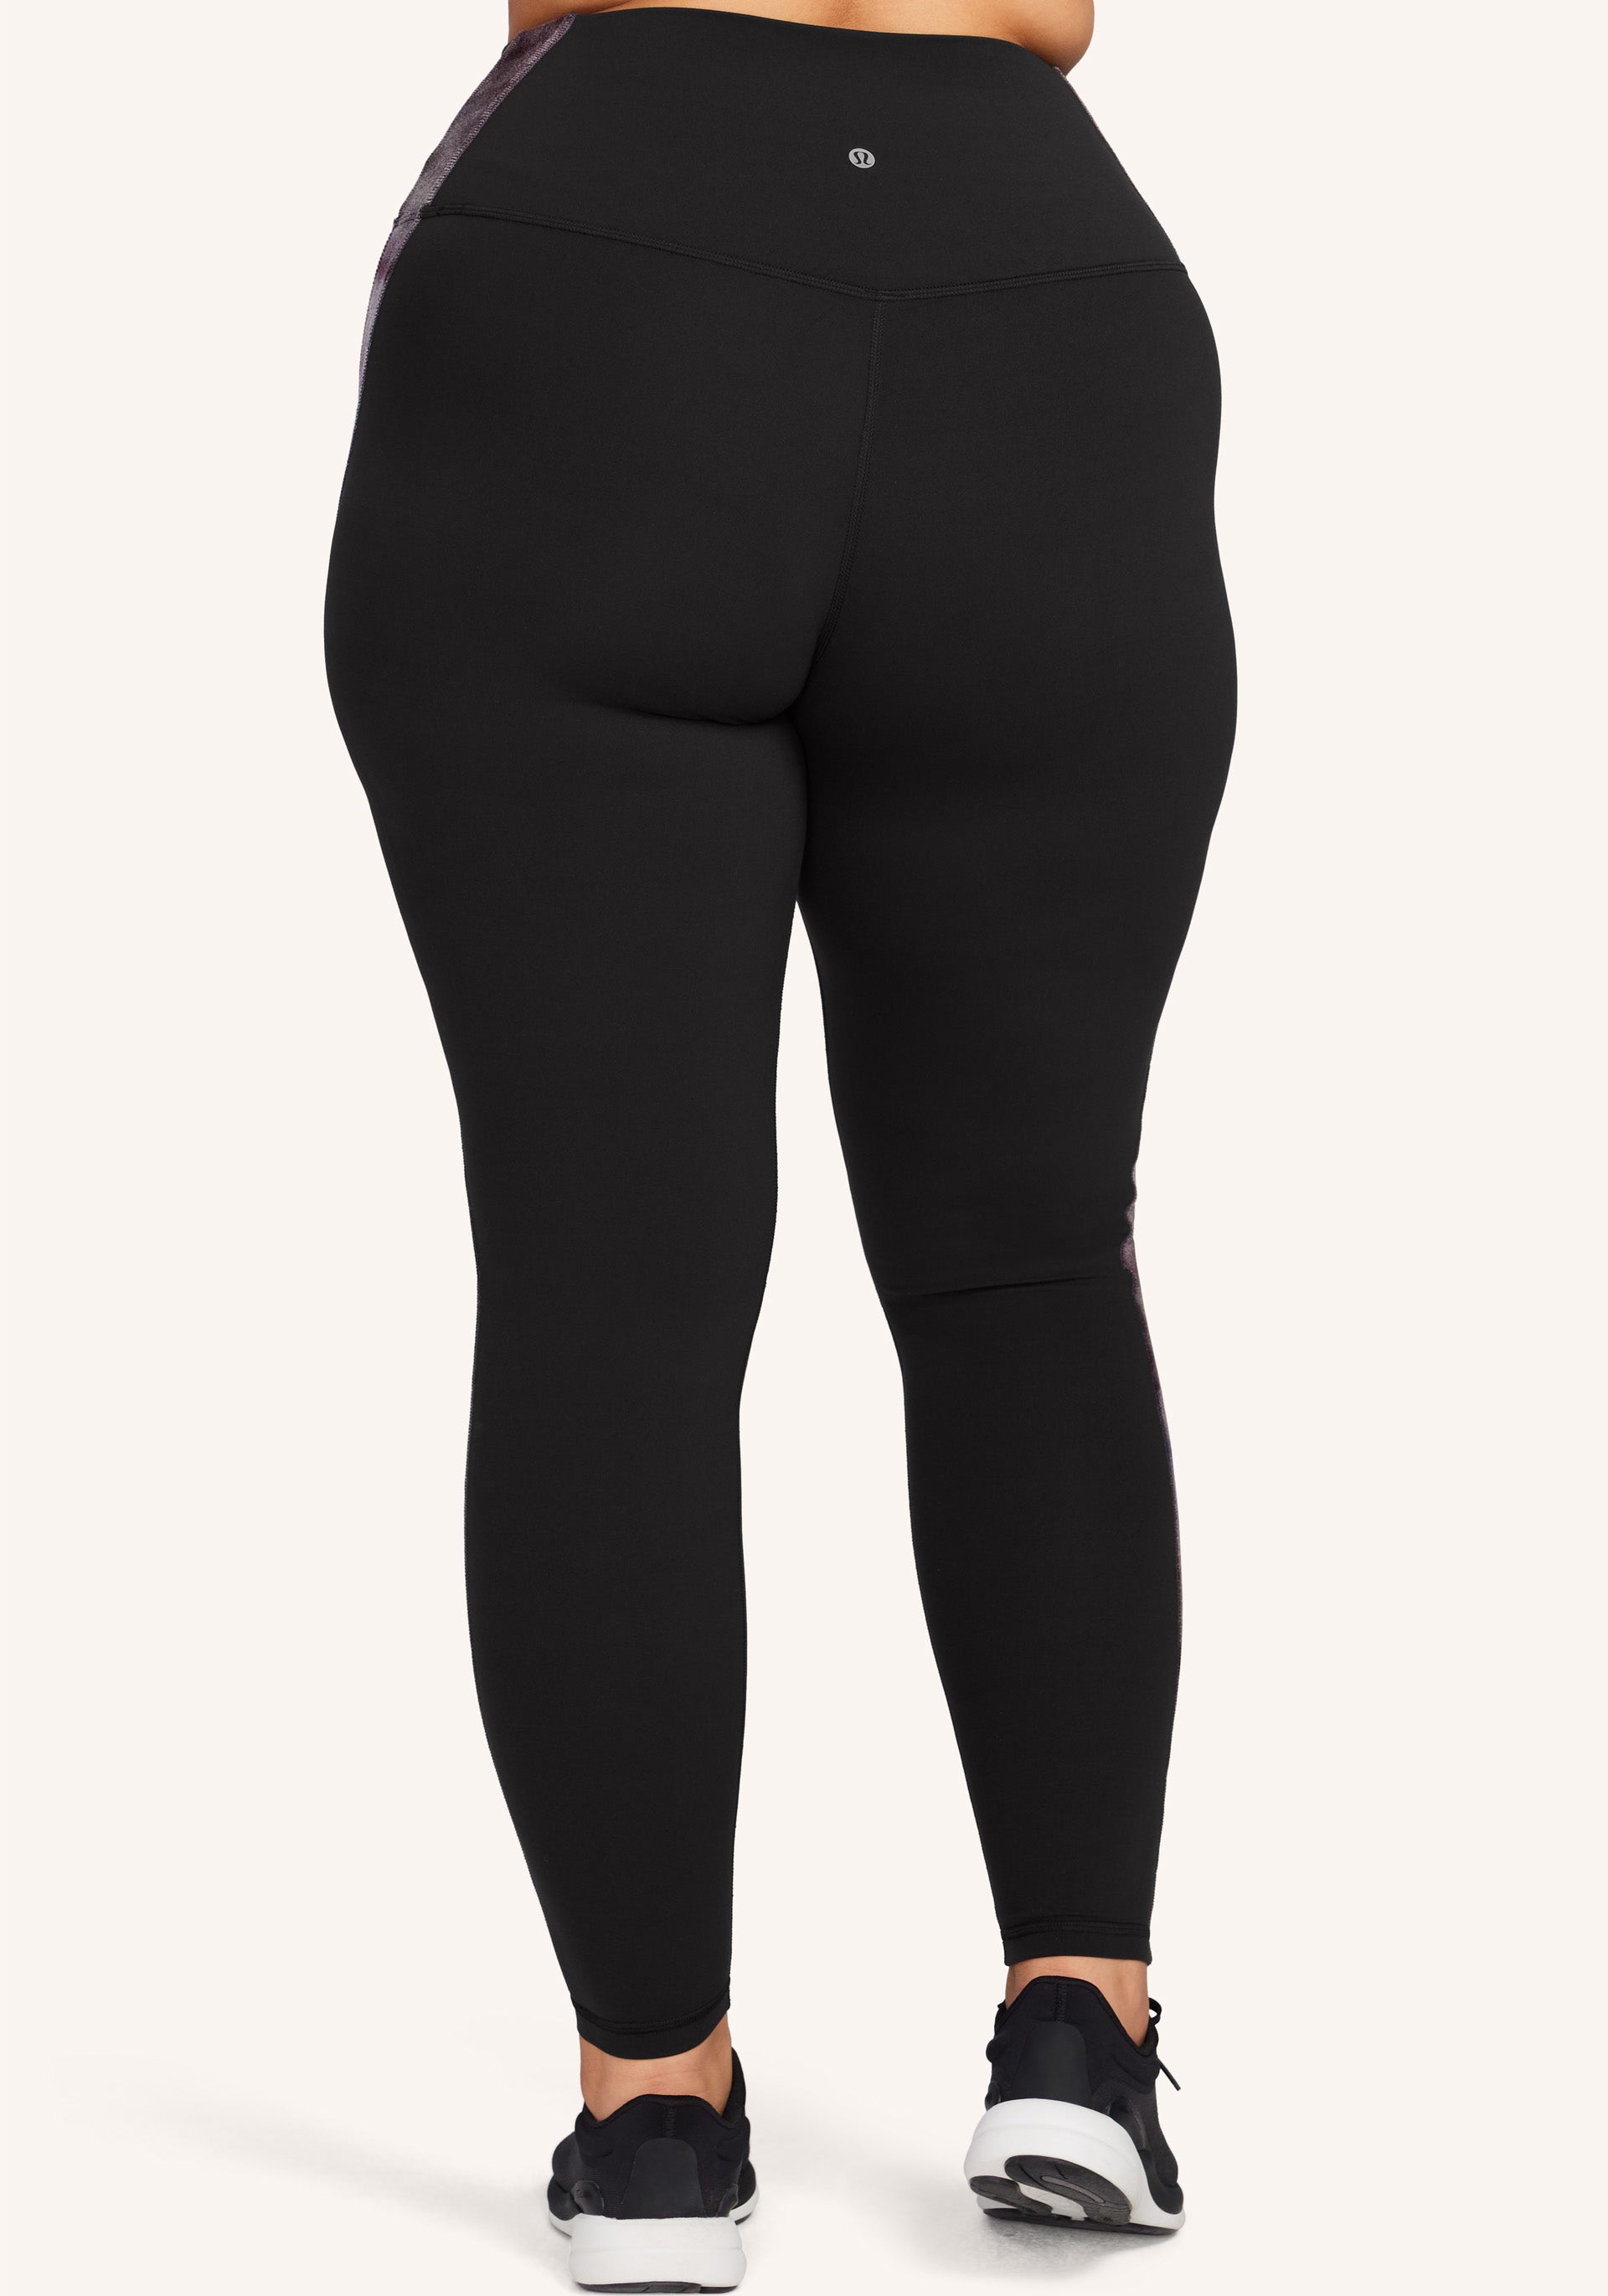 Lululemon Athletica Black Active Pants Size 4 - 55% off